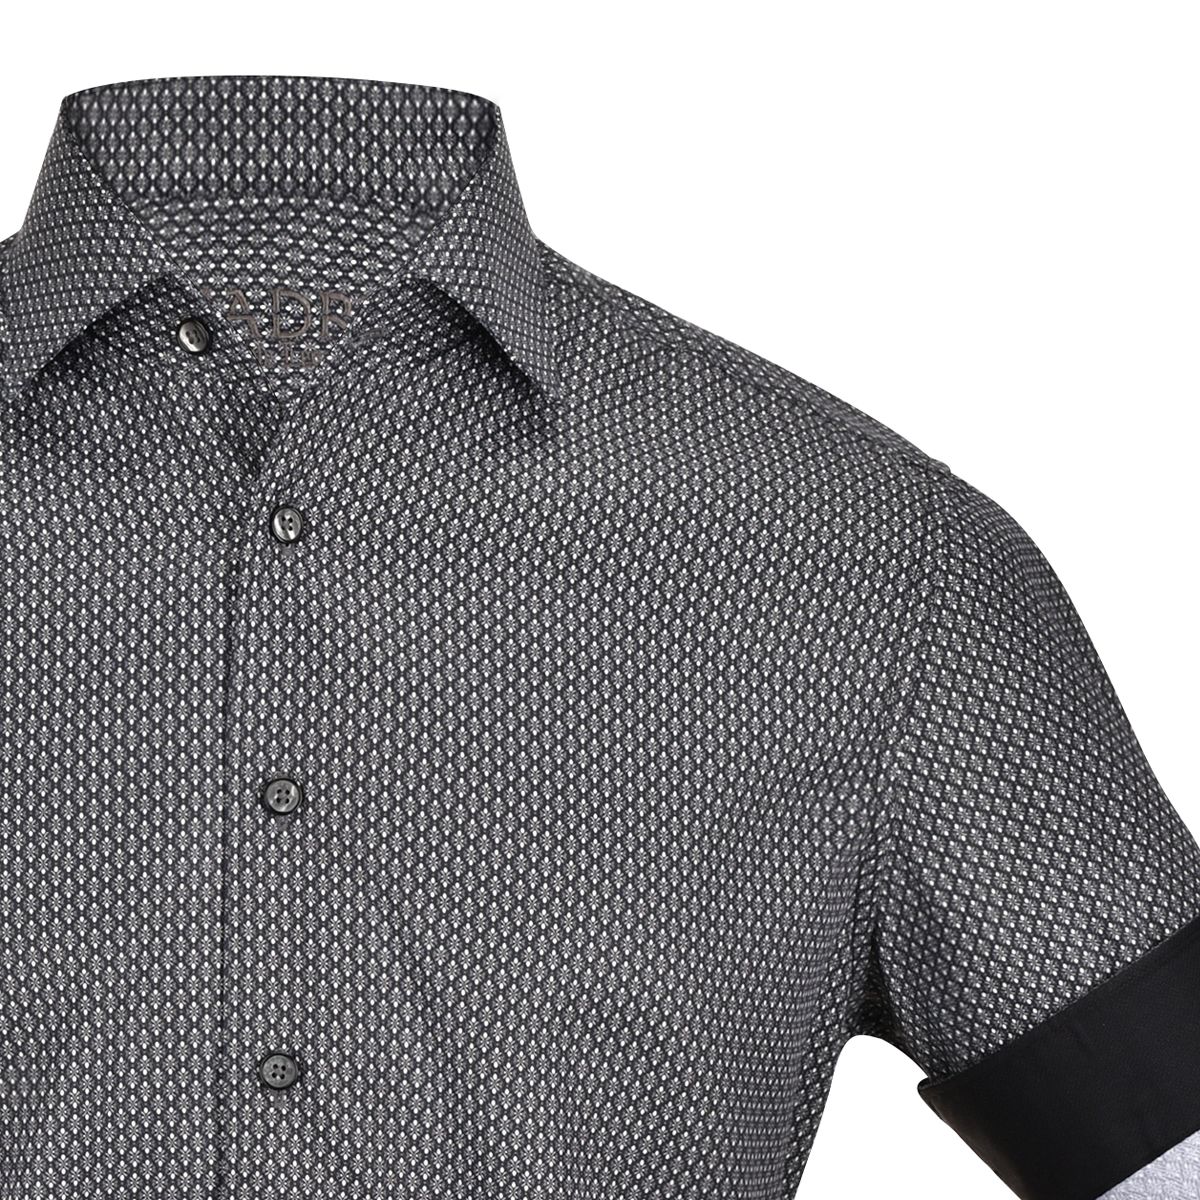 CMW555R - Cuadra black casual fashion cotton shirt for men-Kuet.us